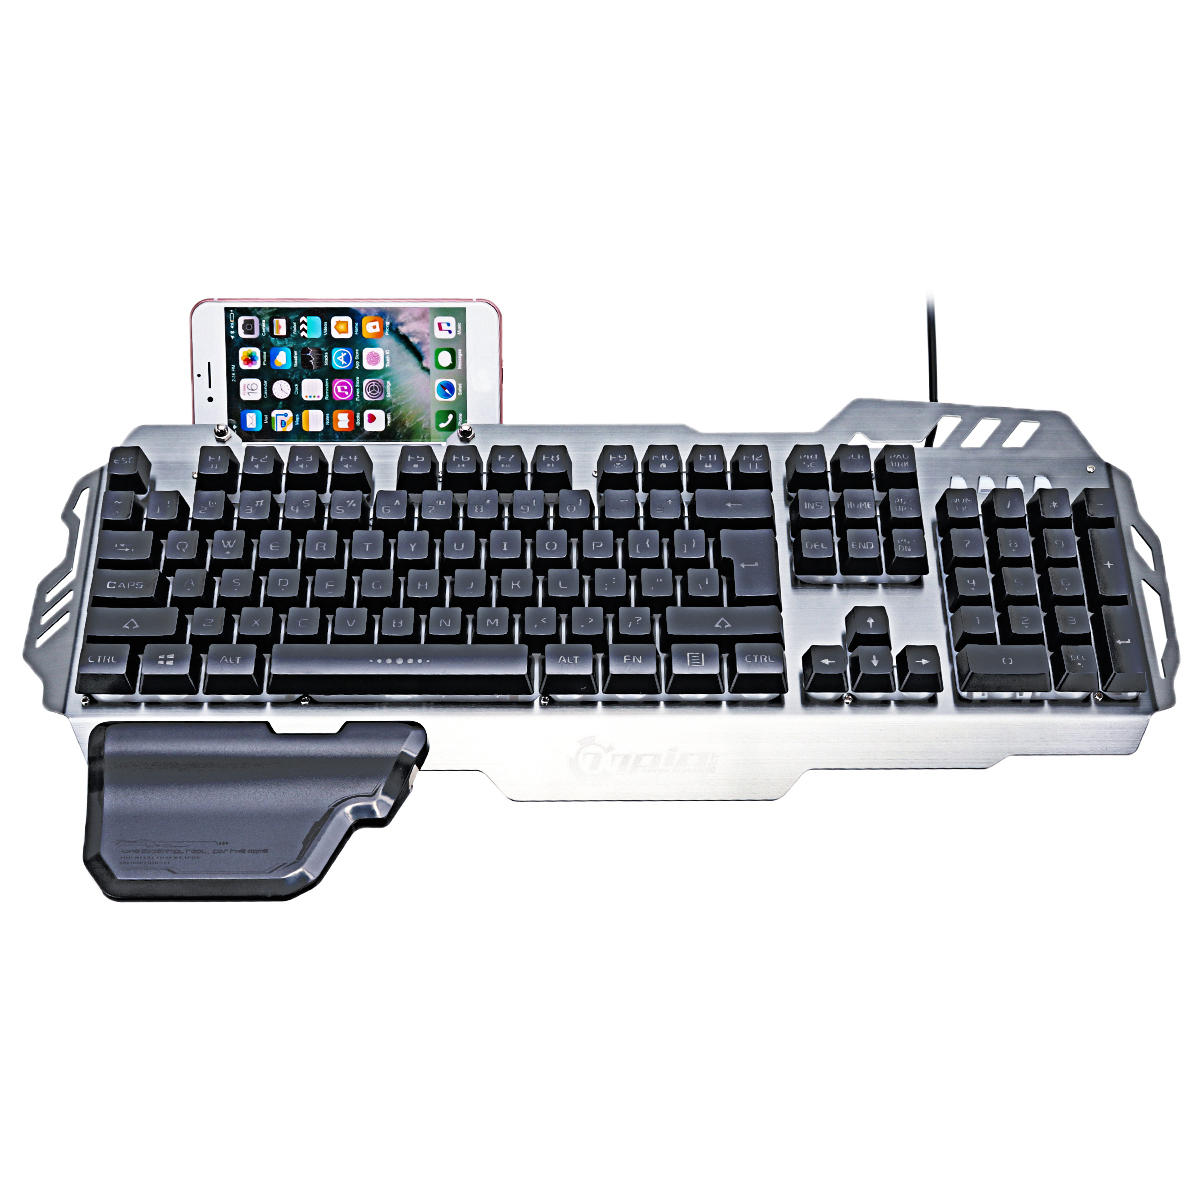 PK-900 104 Keys USB Wired Backlit Mechanical-Handfeel Gaming Keyboard